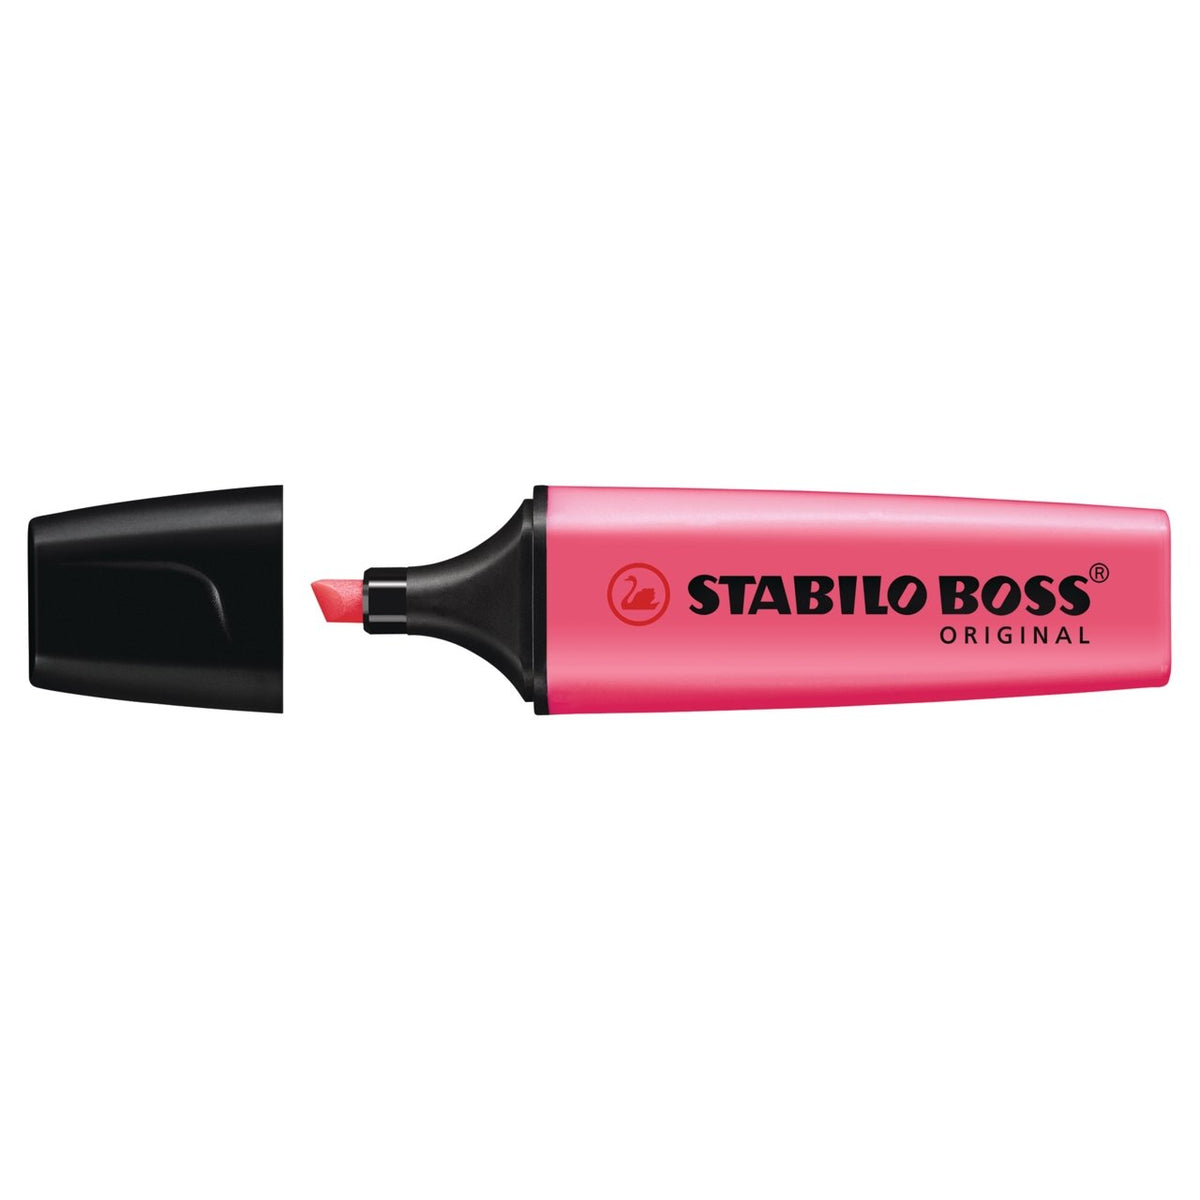 Stabilo BOSS Original Highlighter - Pink 